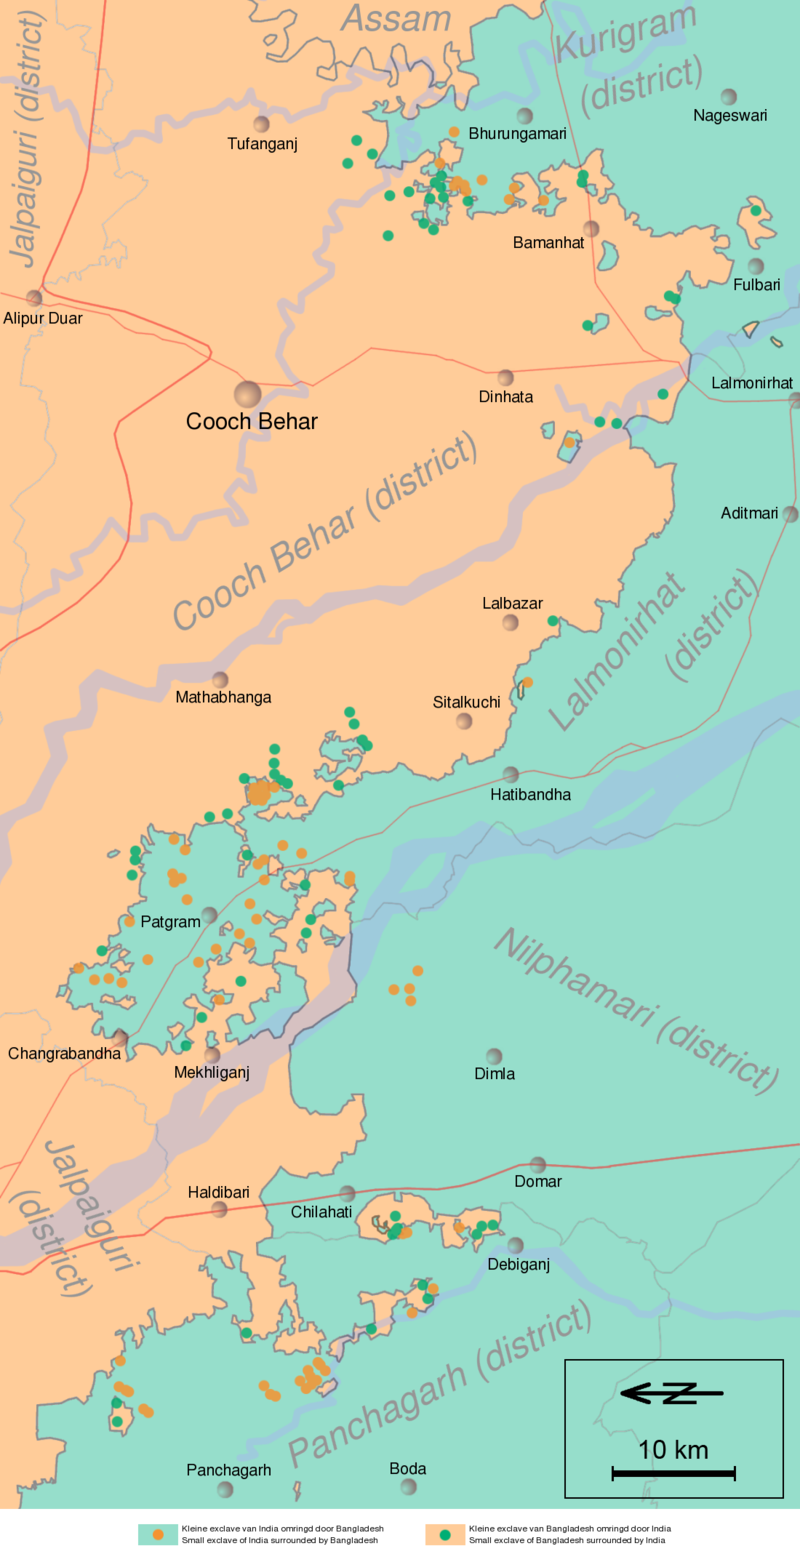 India–Bangladesh enclaves - Wikipedia